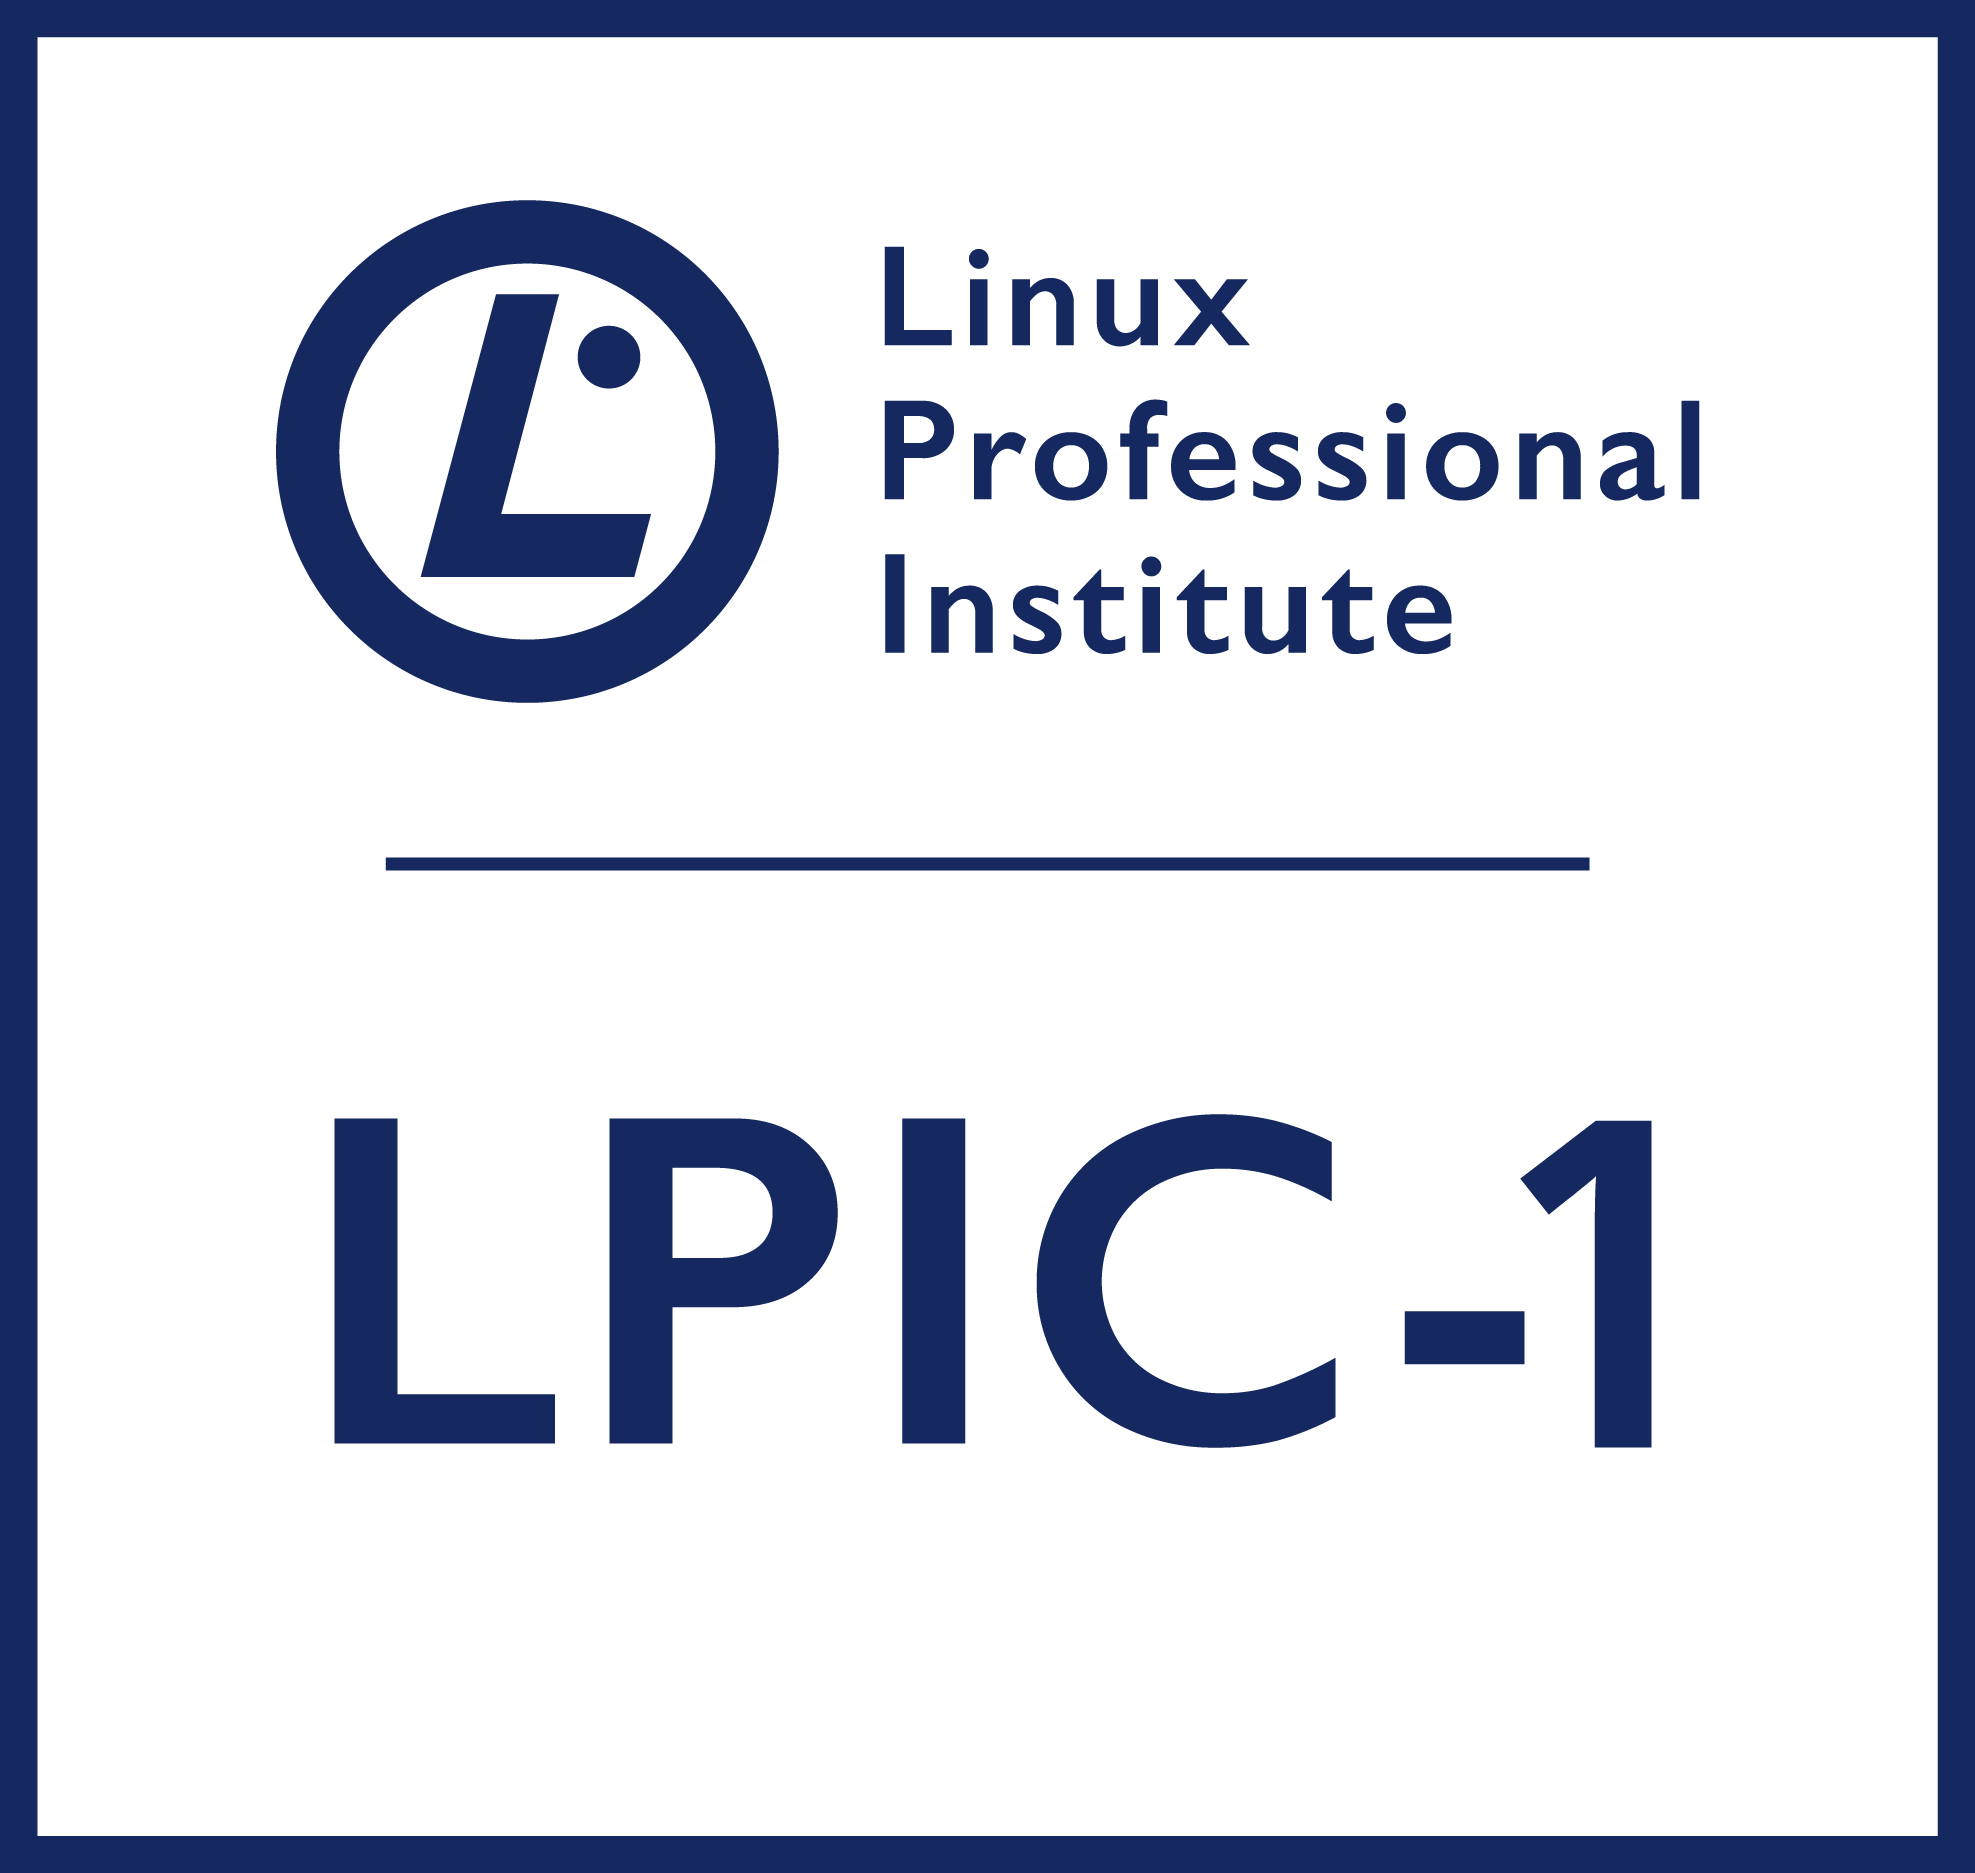 LPIC受験バウチャー